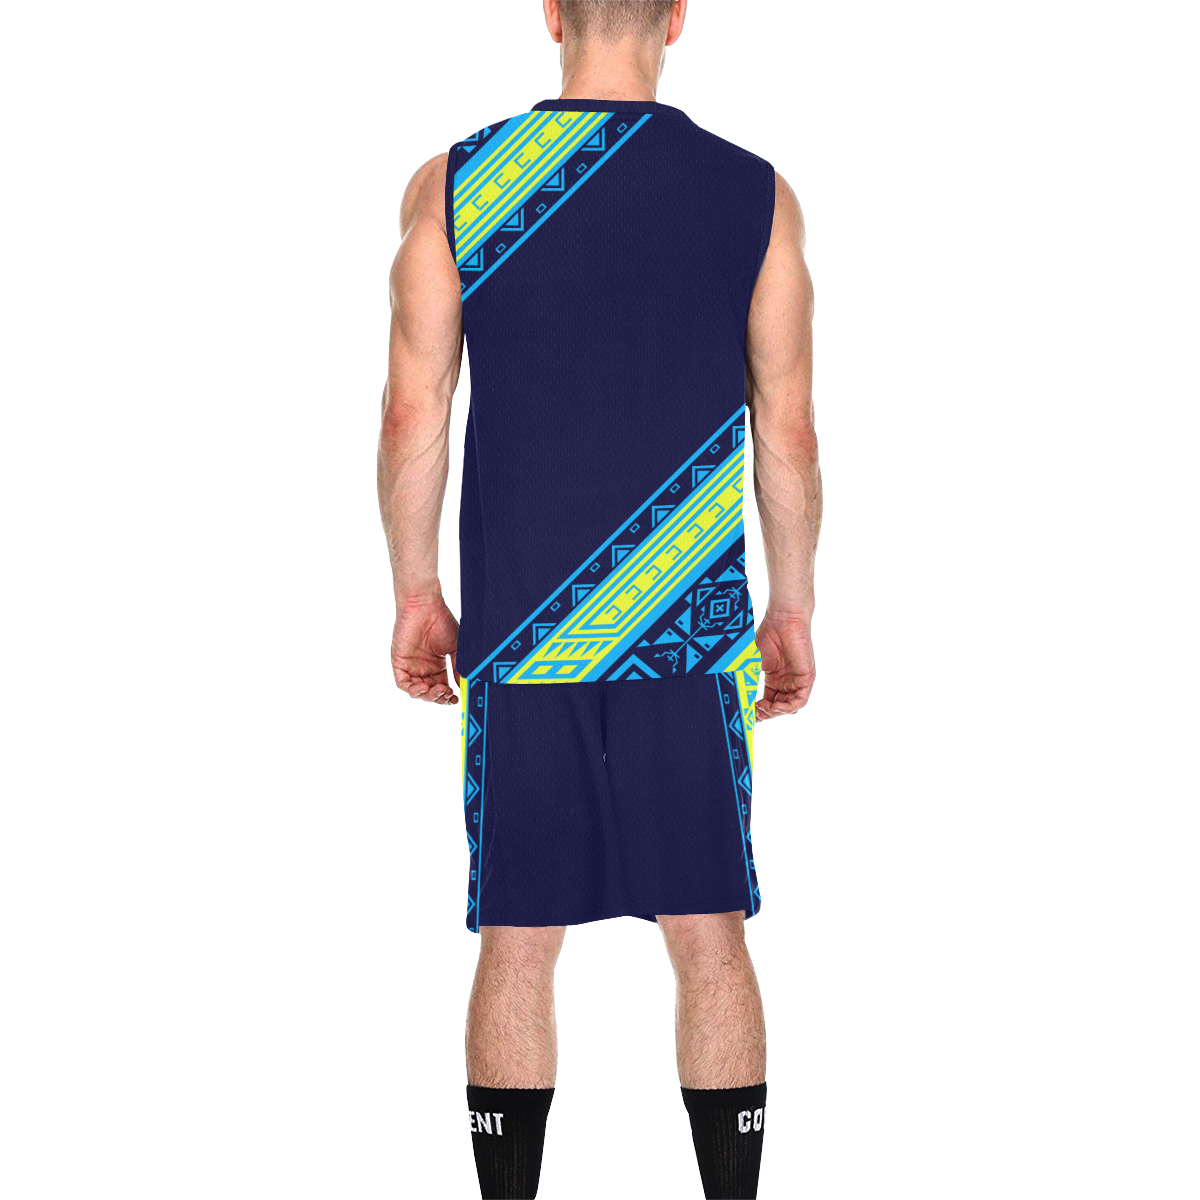 Little Wound All Over Print Basketball Uniform